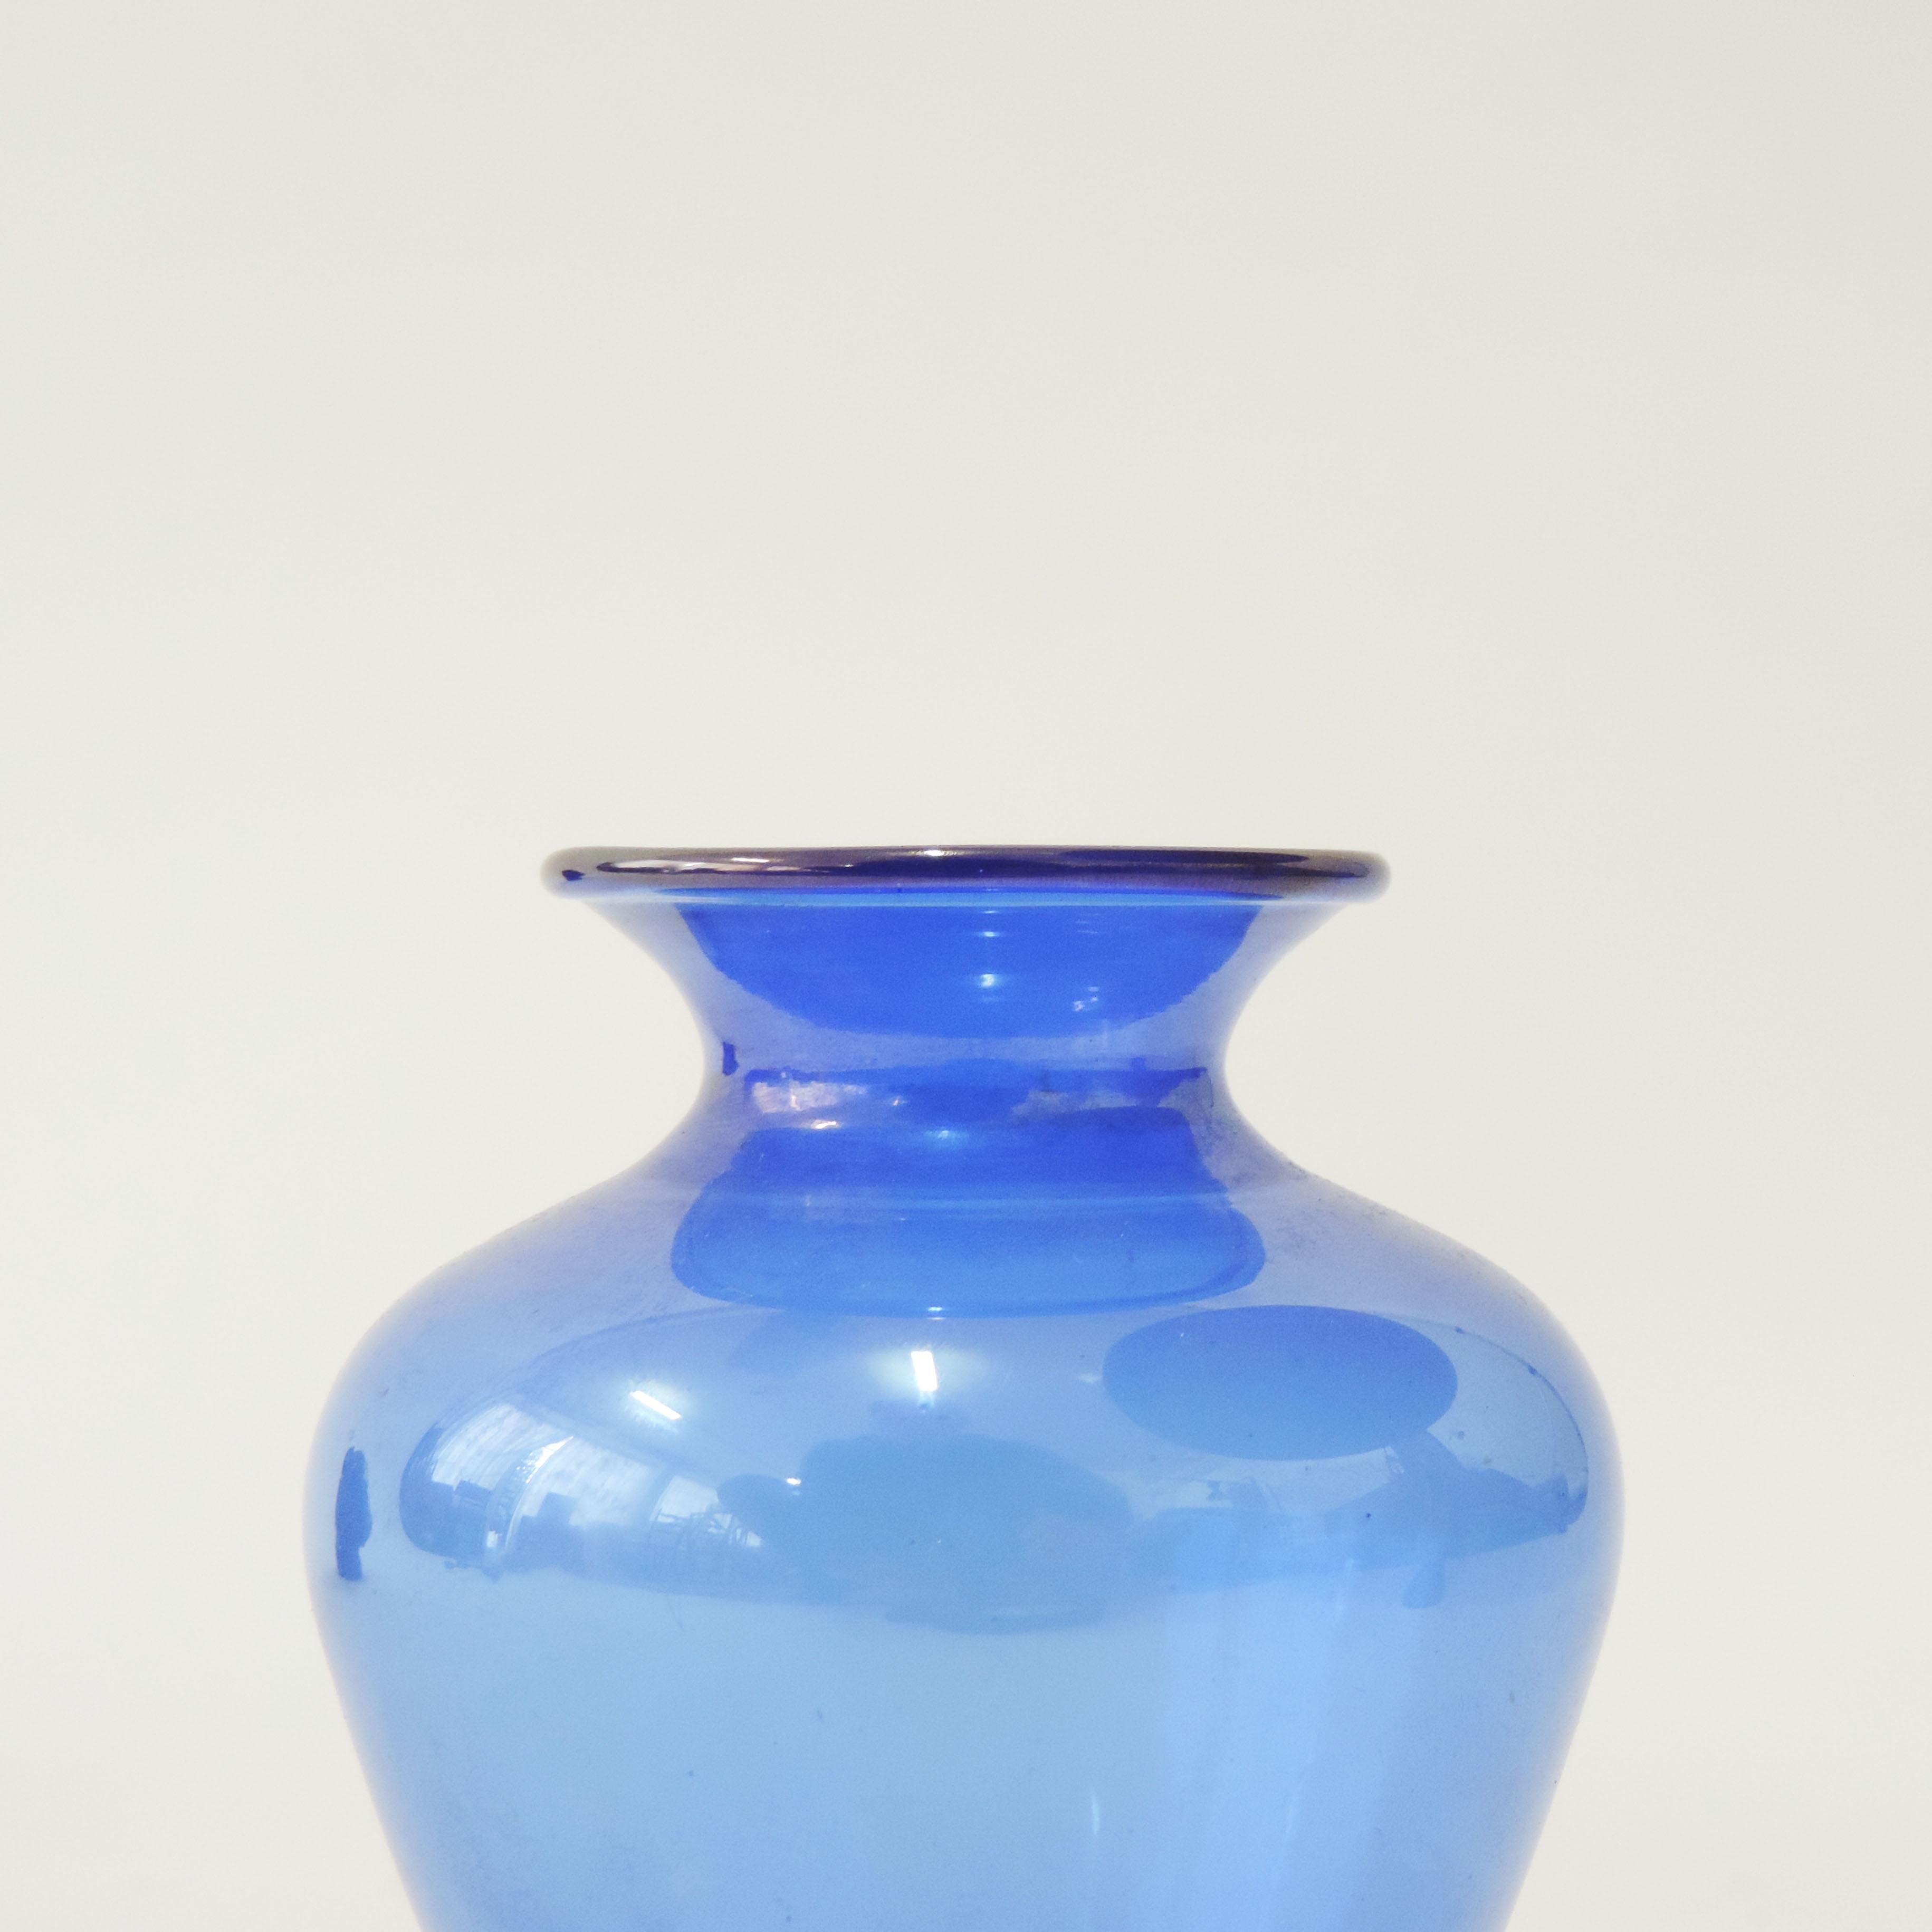 M.V.M Cappellin Murano glass vase Model No. 5383 in blue, Italy, 1920s
Signed MVM Cappellin Murano.